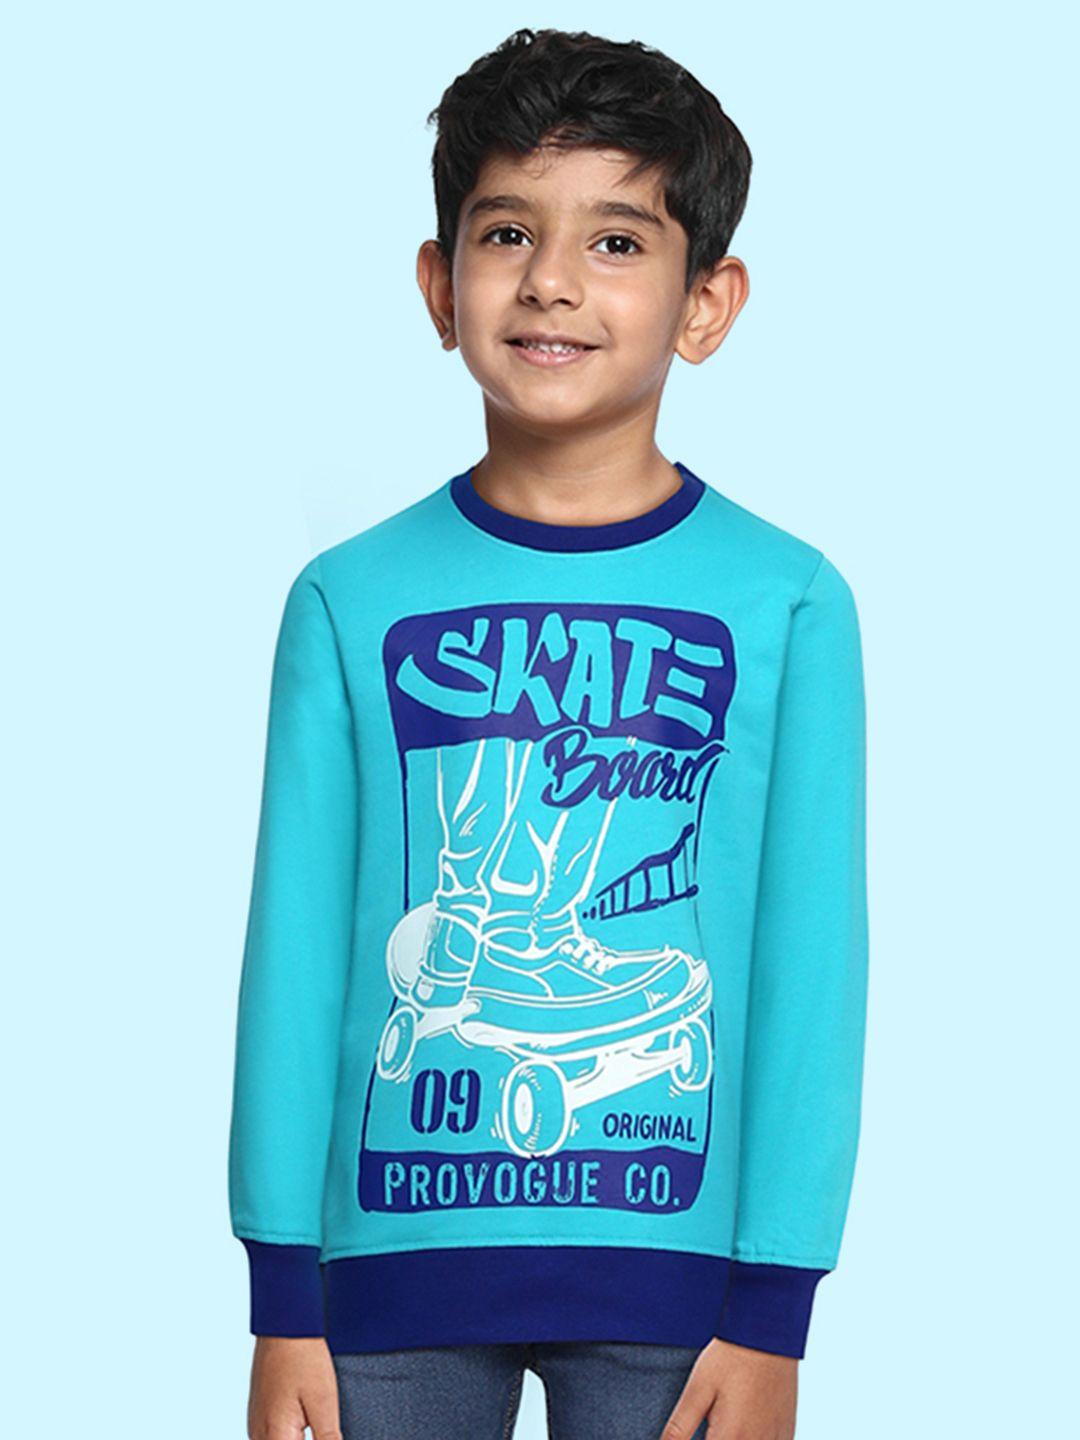 provogue-boys-turquoise-blue-printed-sweatshirt